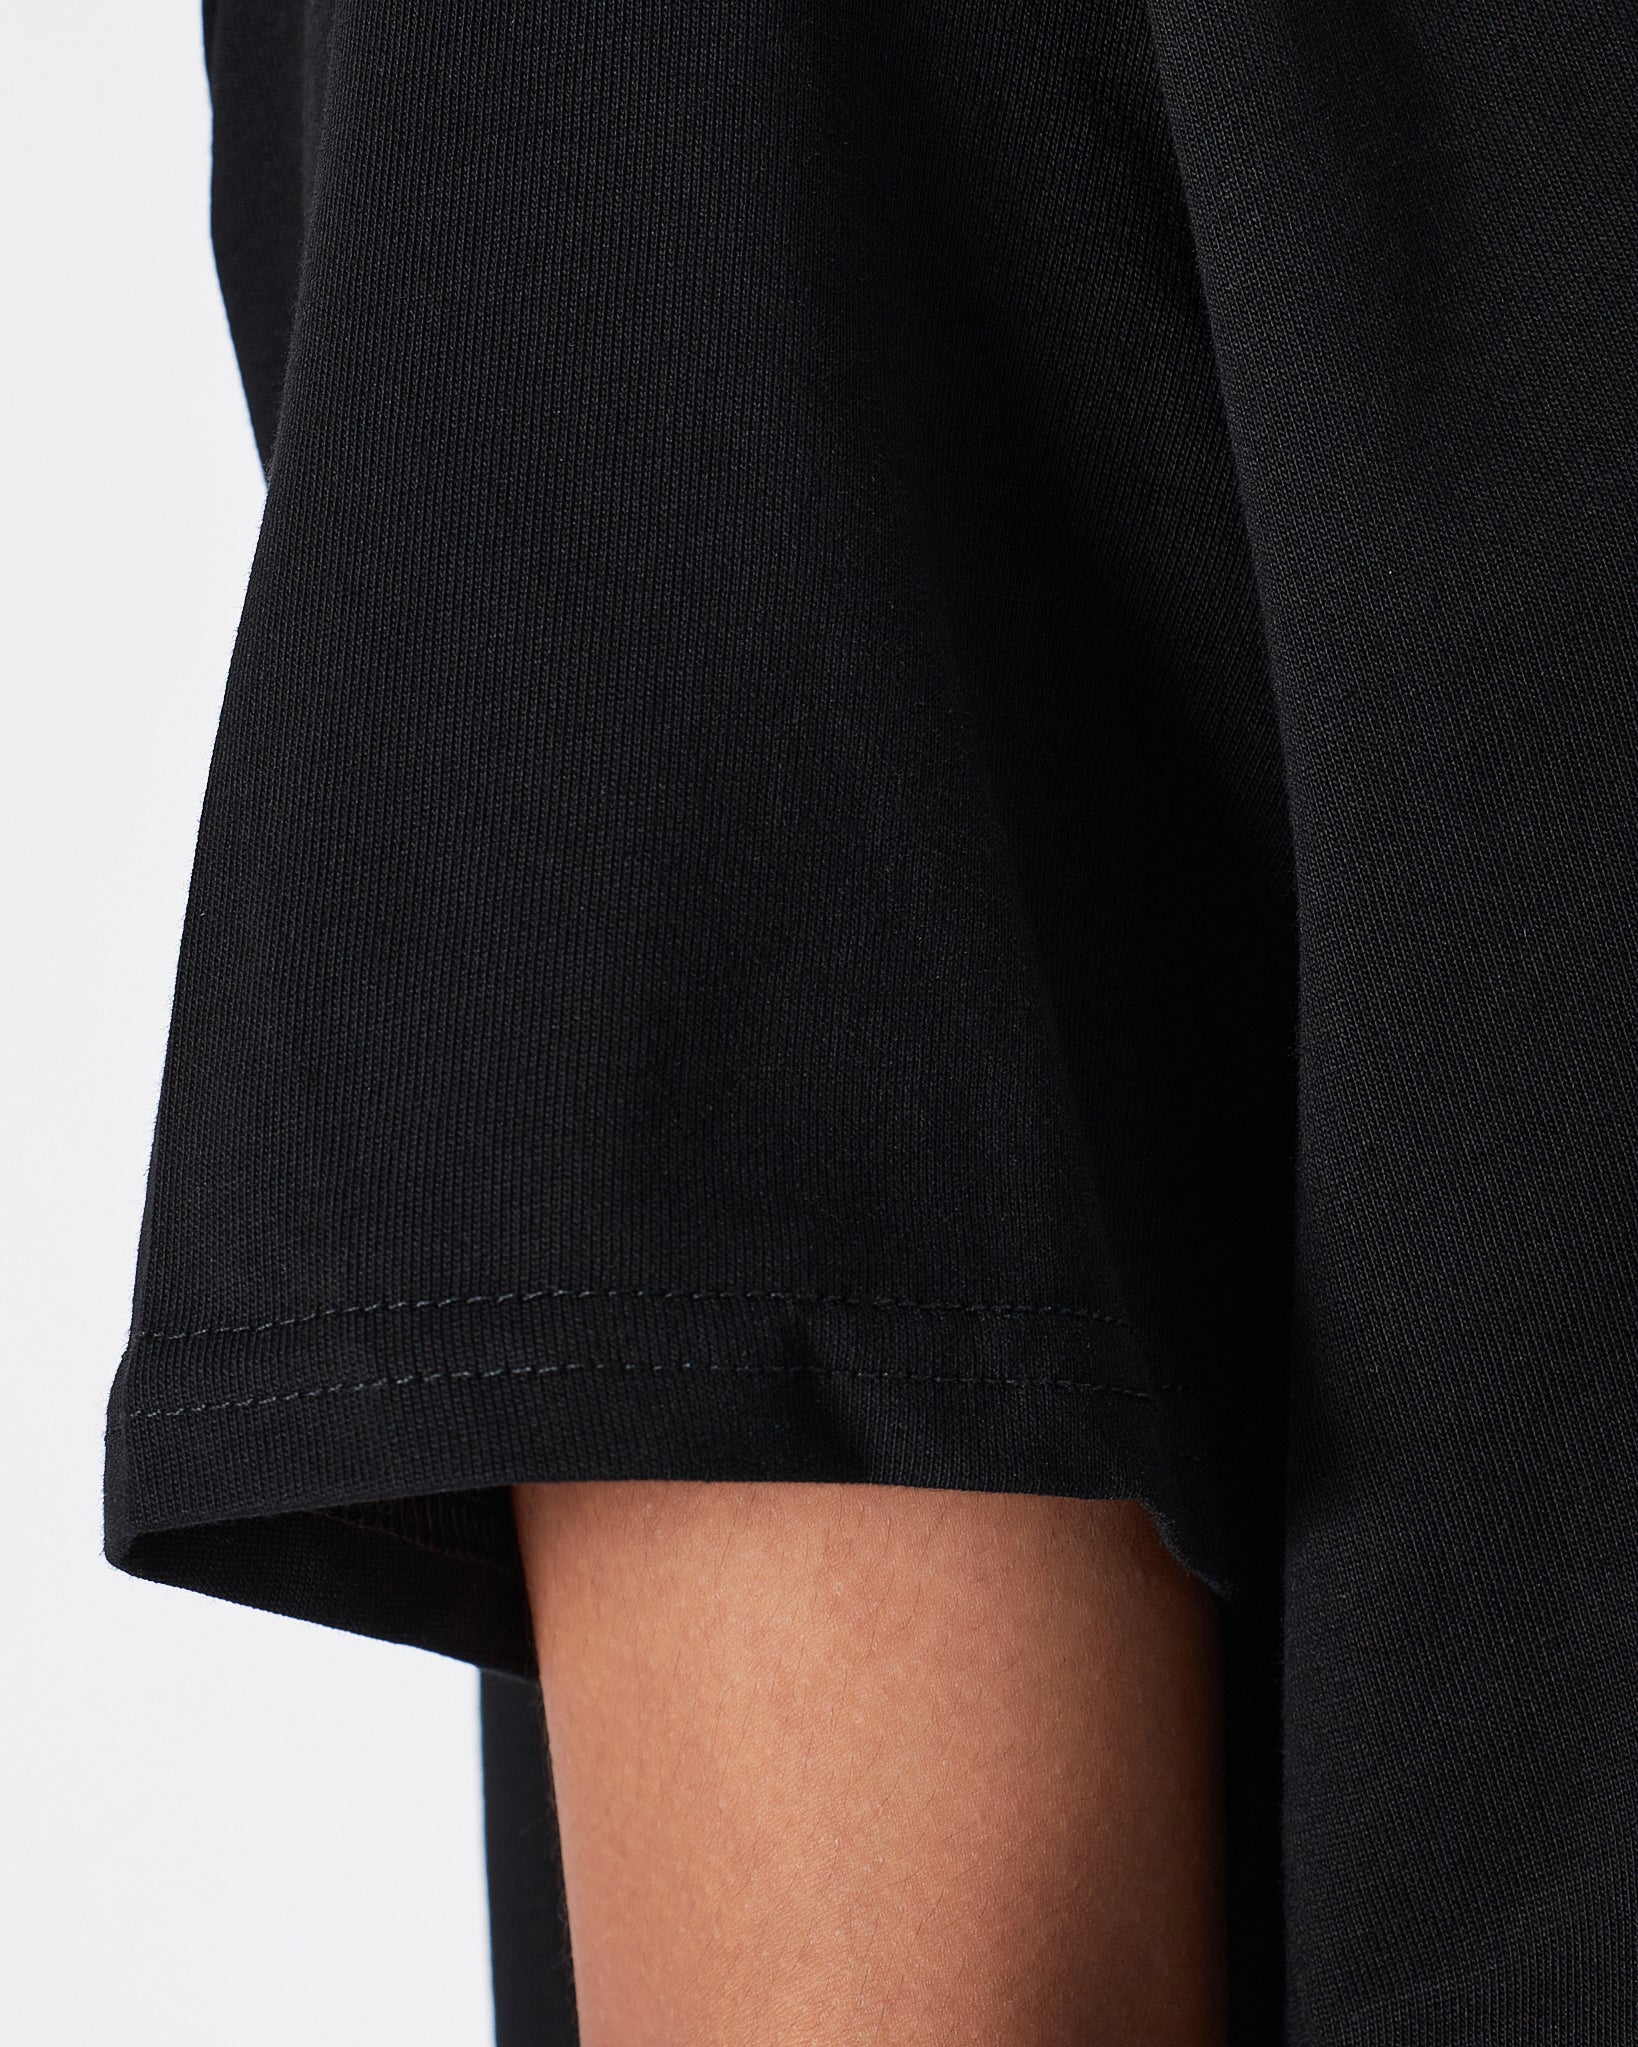 MOI OUTFIT-CC Rhinestone Lady Black T-Shirt 55.90